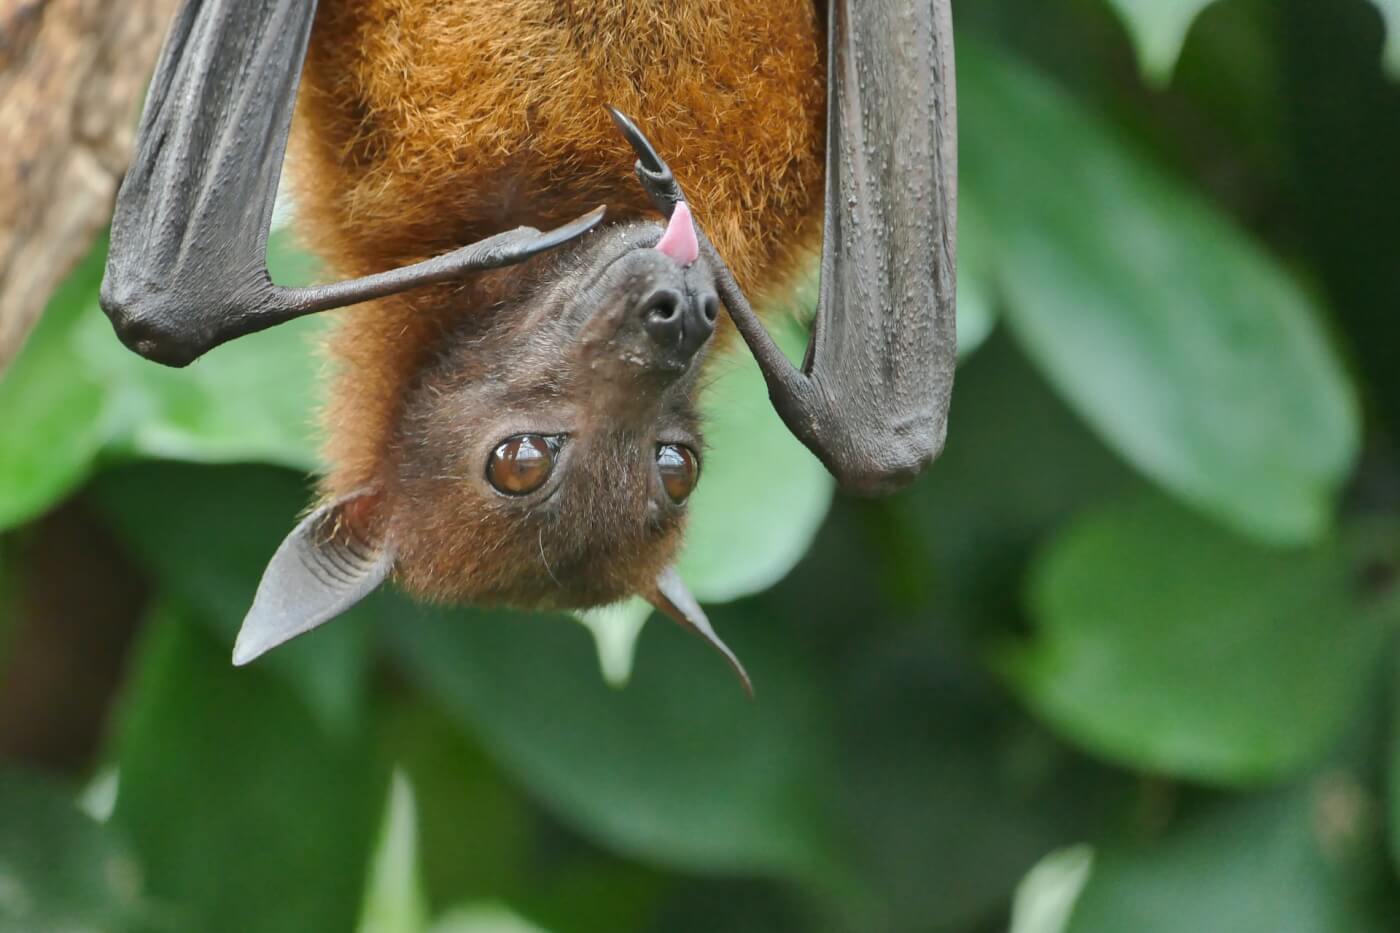 A black and brown fruit bat hangs upside down in a tree